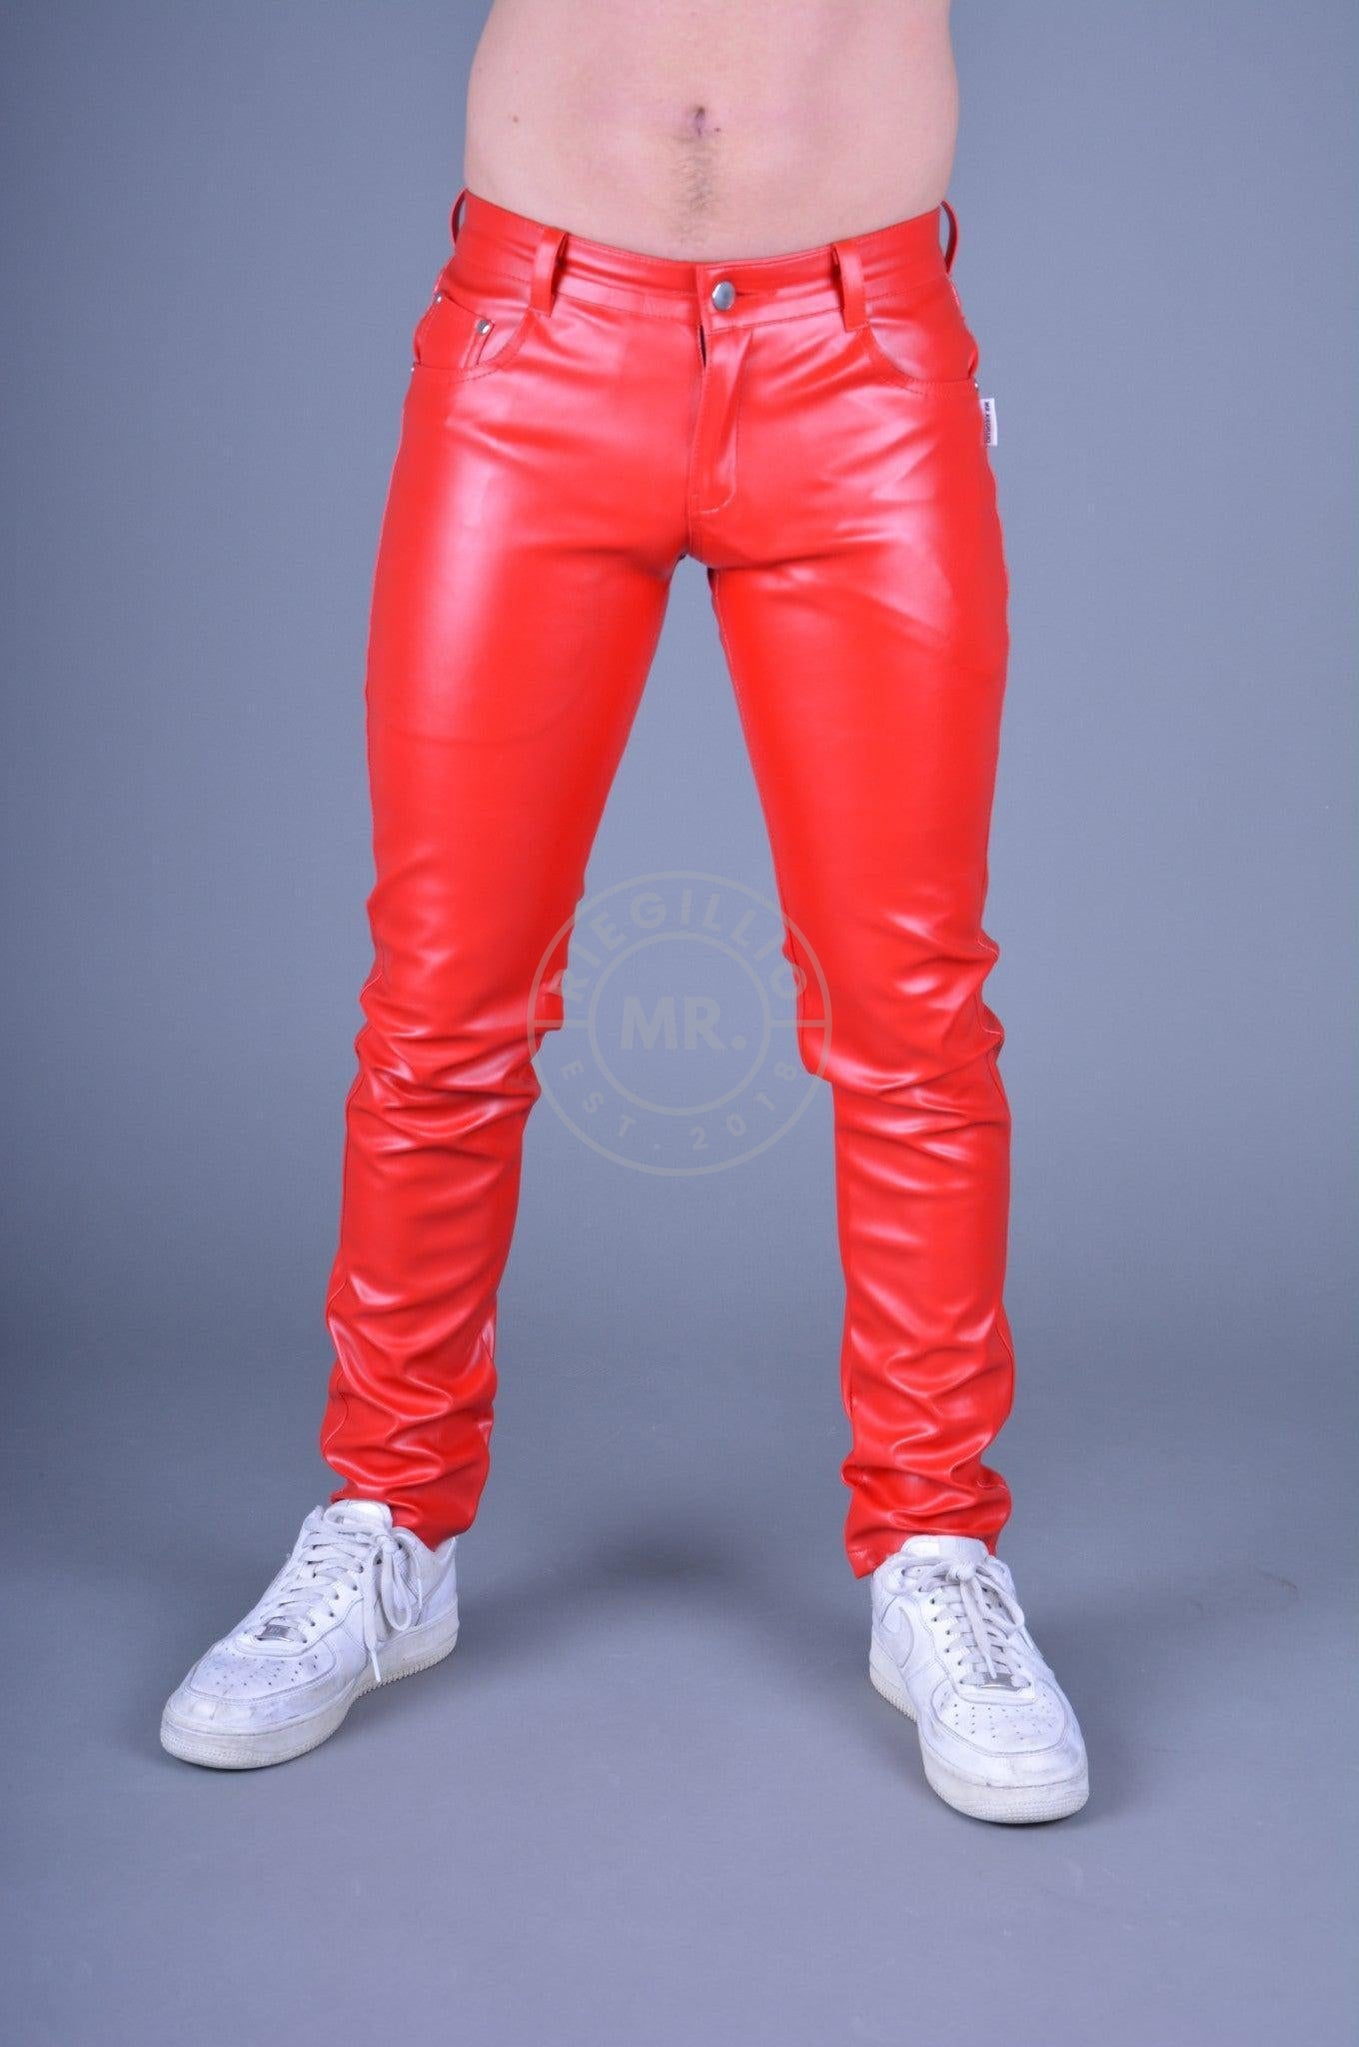 MR. 5-Pocket Pants Red *DISCONTINUED ITEM*-at MR. Riegillio